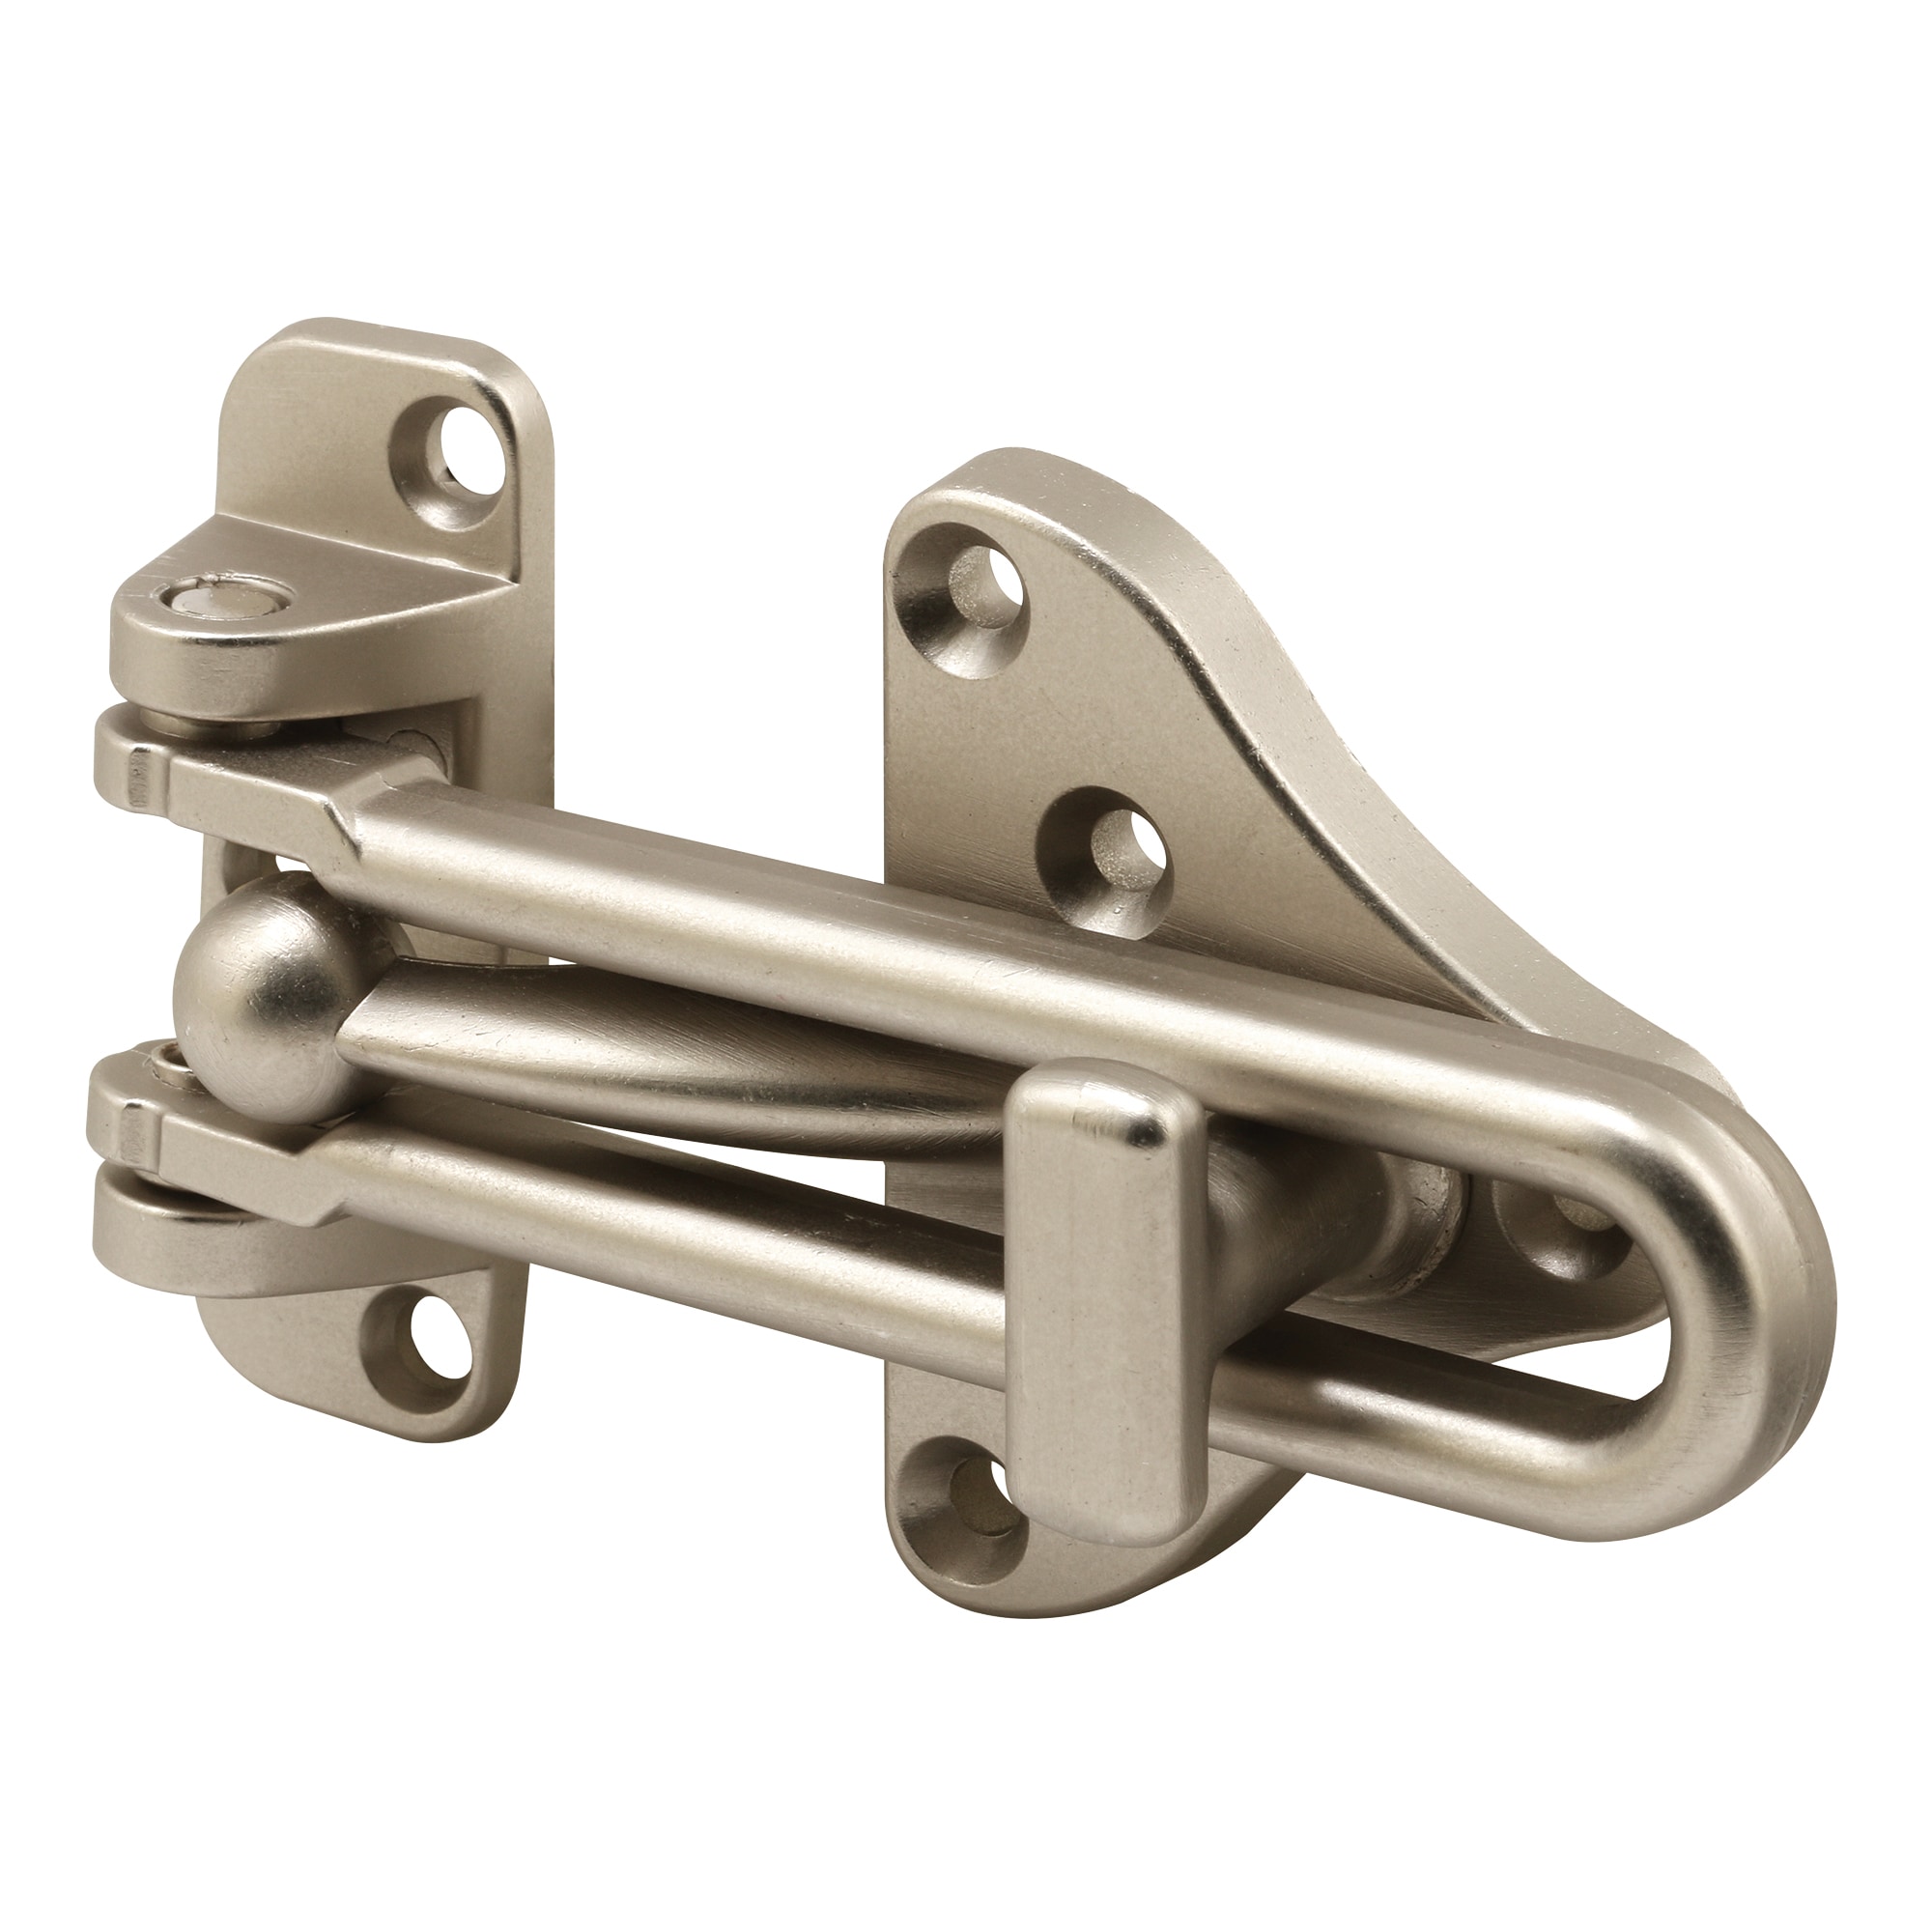 Metal Locking Pin Keepers - 4-Pack - 17% Off